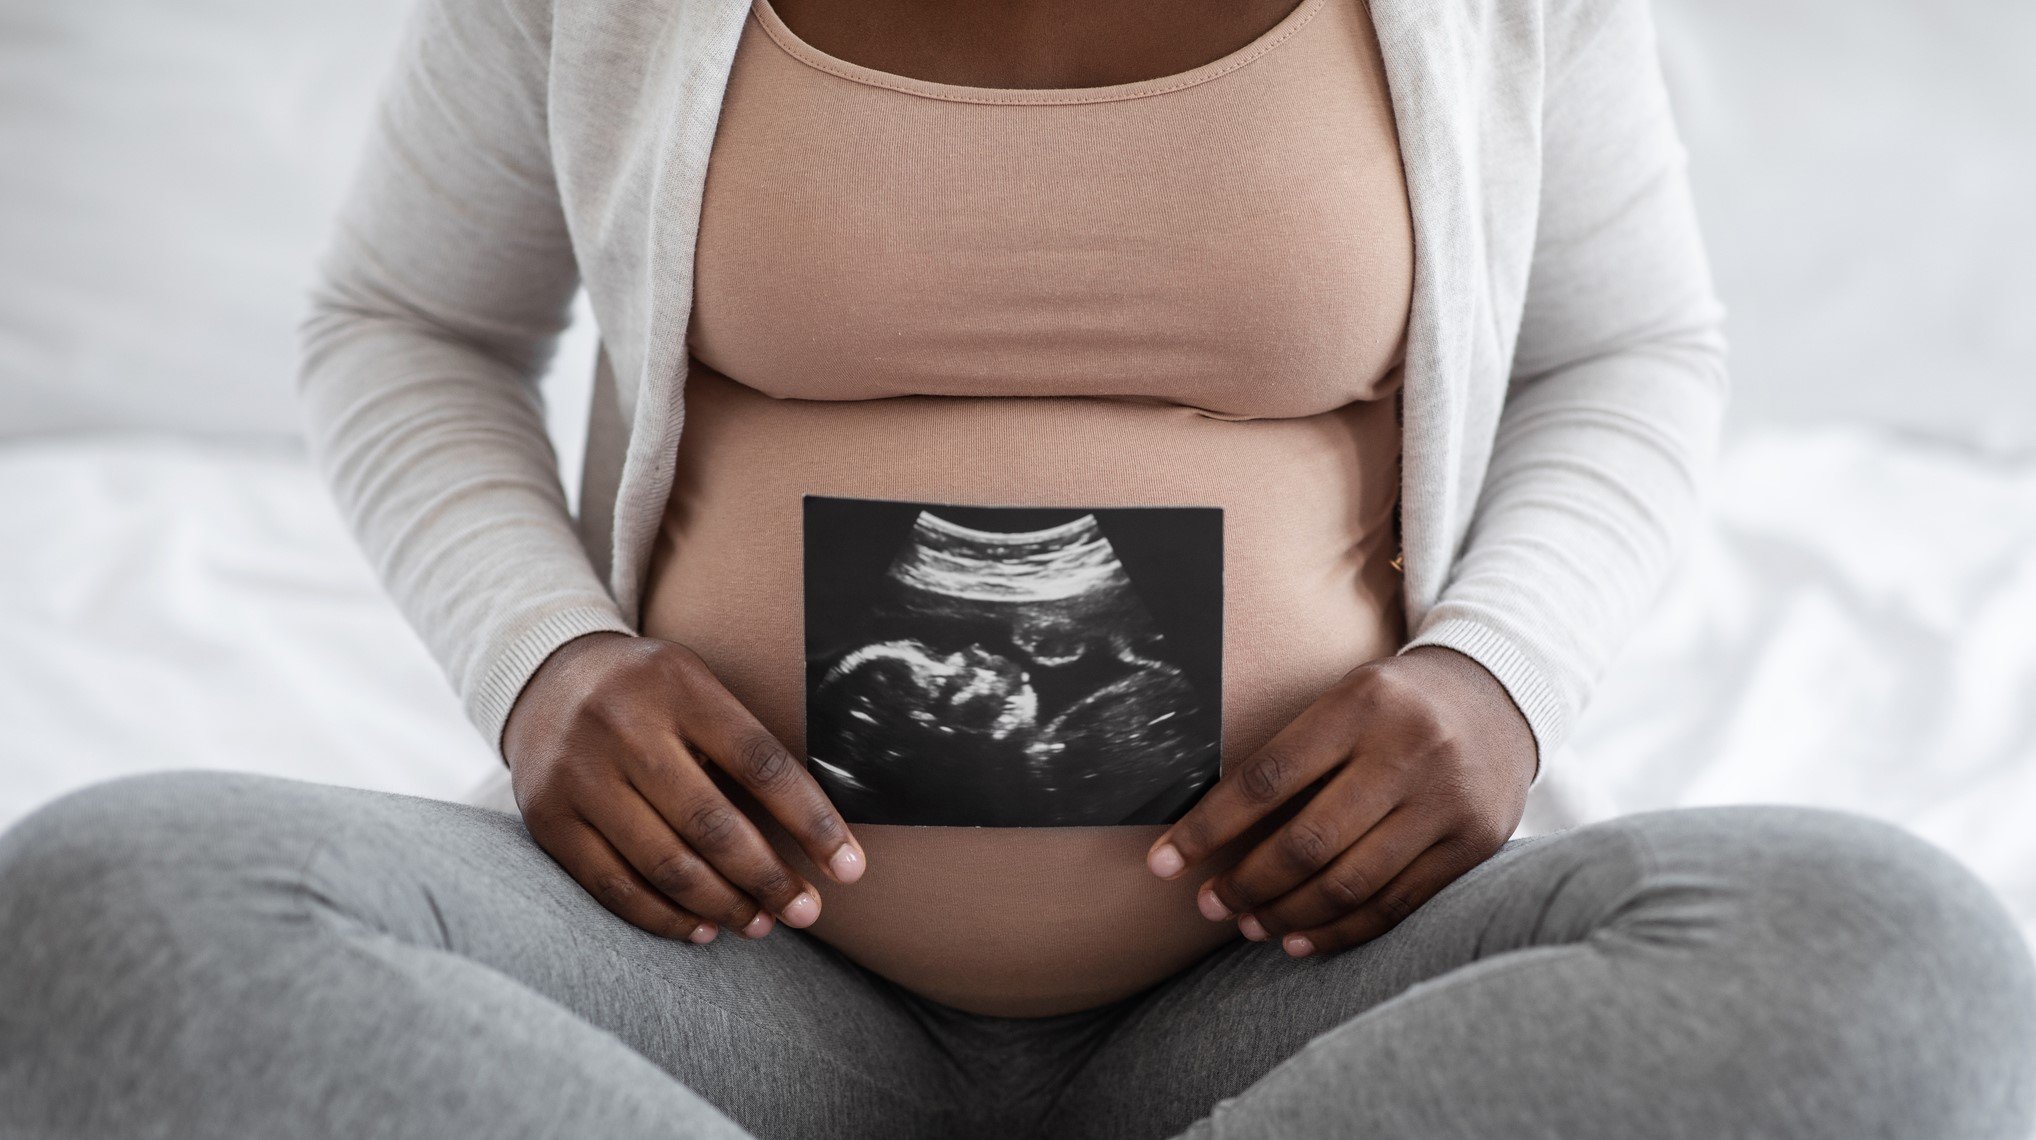 maternal-fetal diseases pregnancy